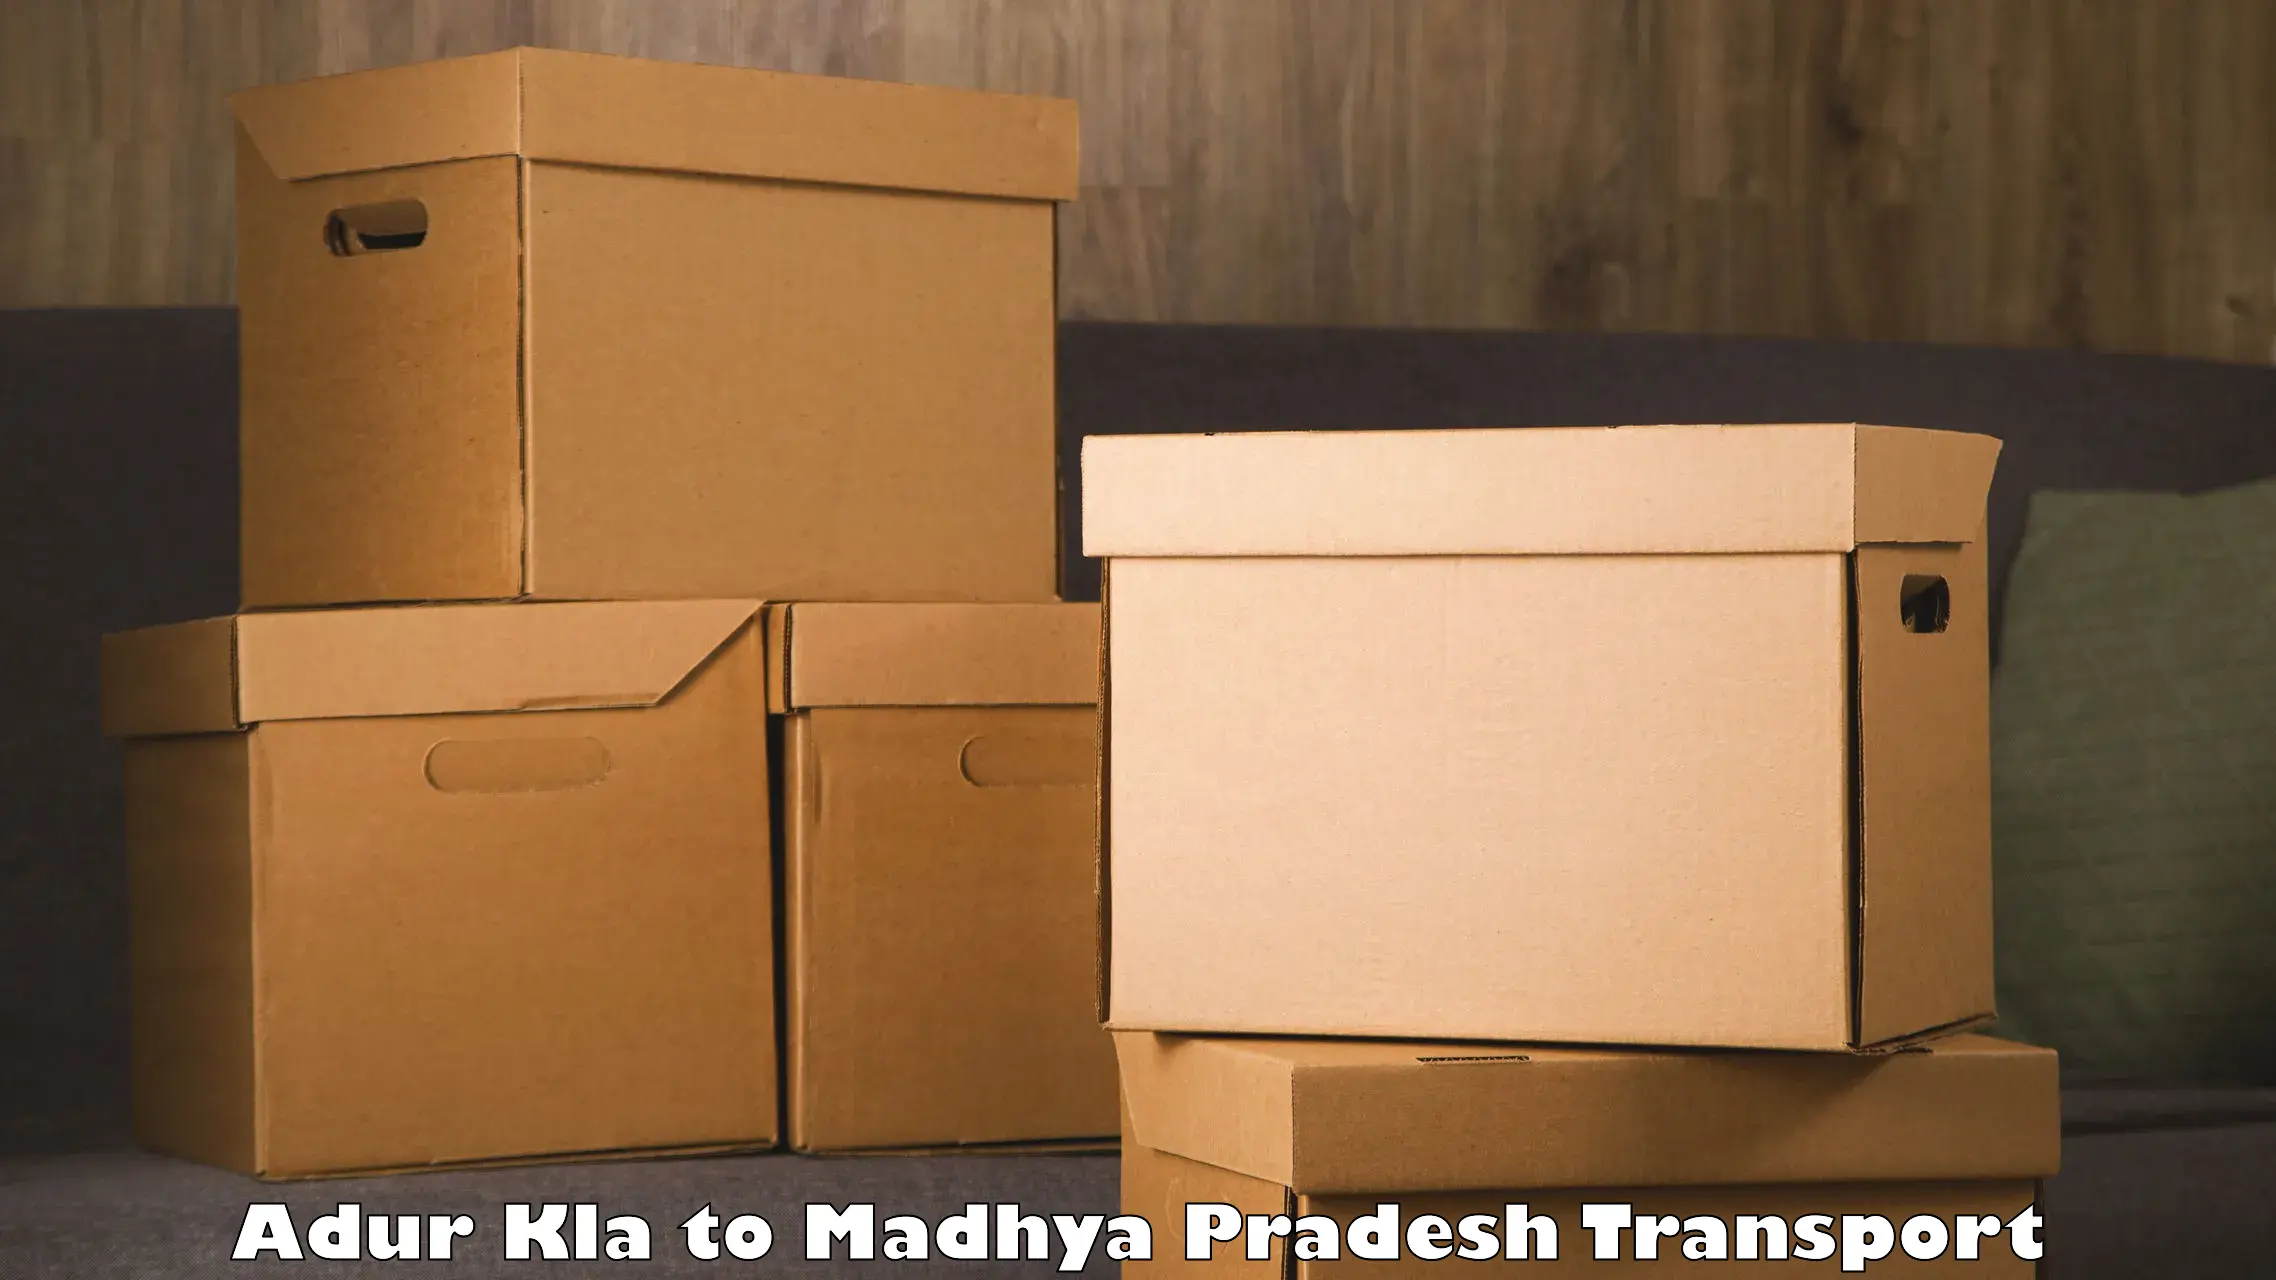 Truck transport companies in India Adur Kla to Bajag